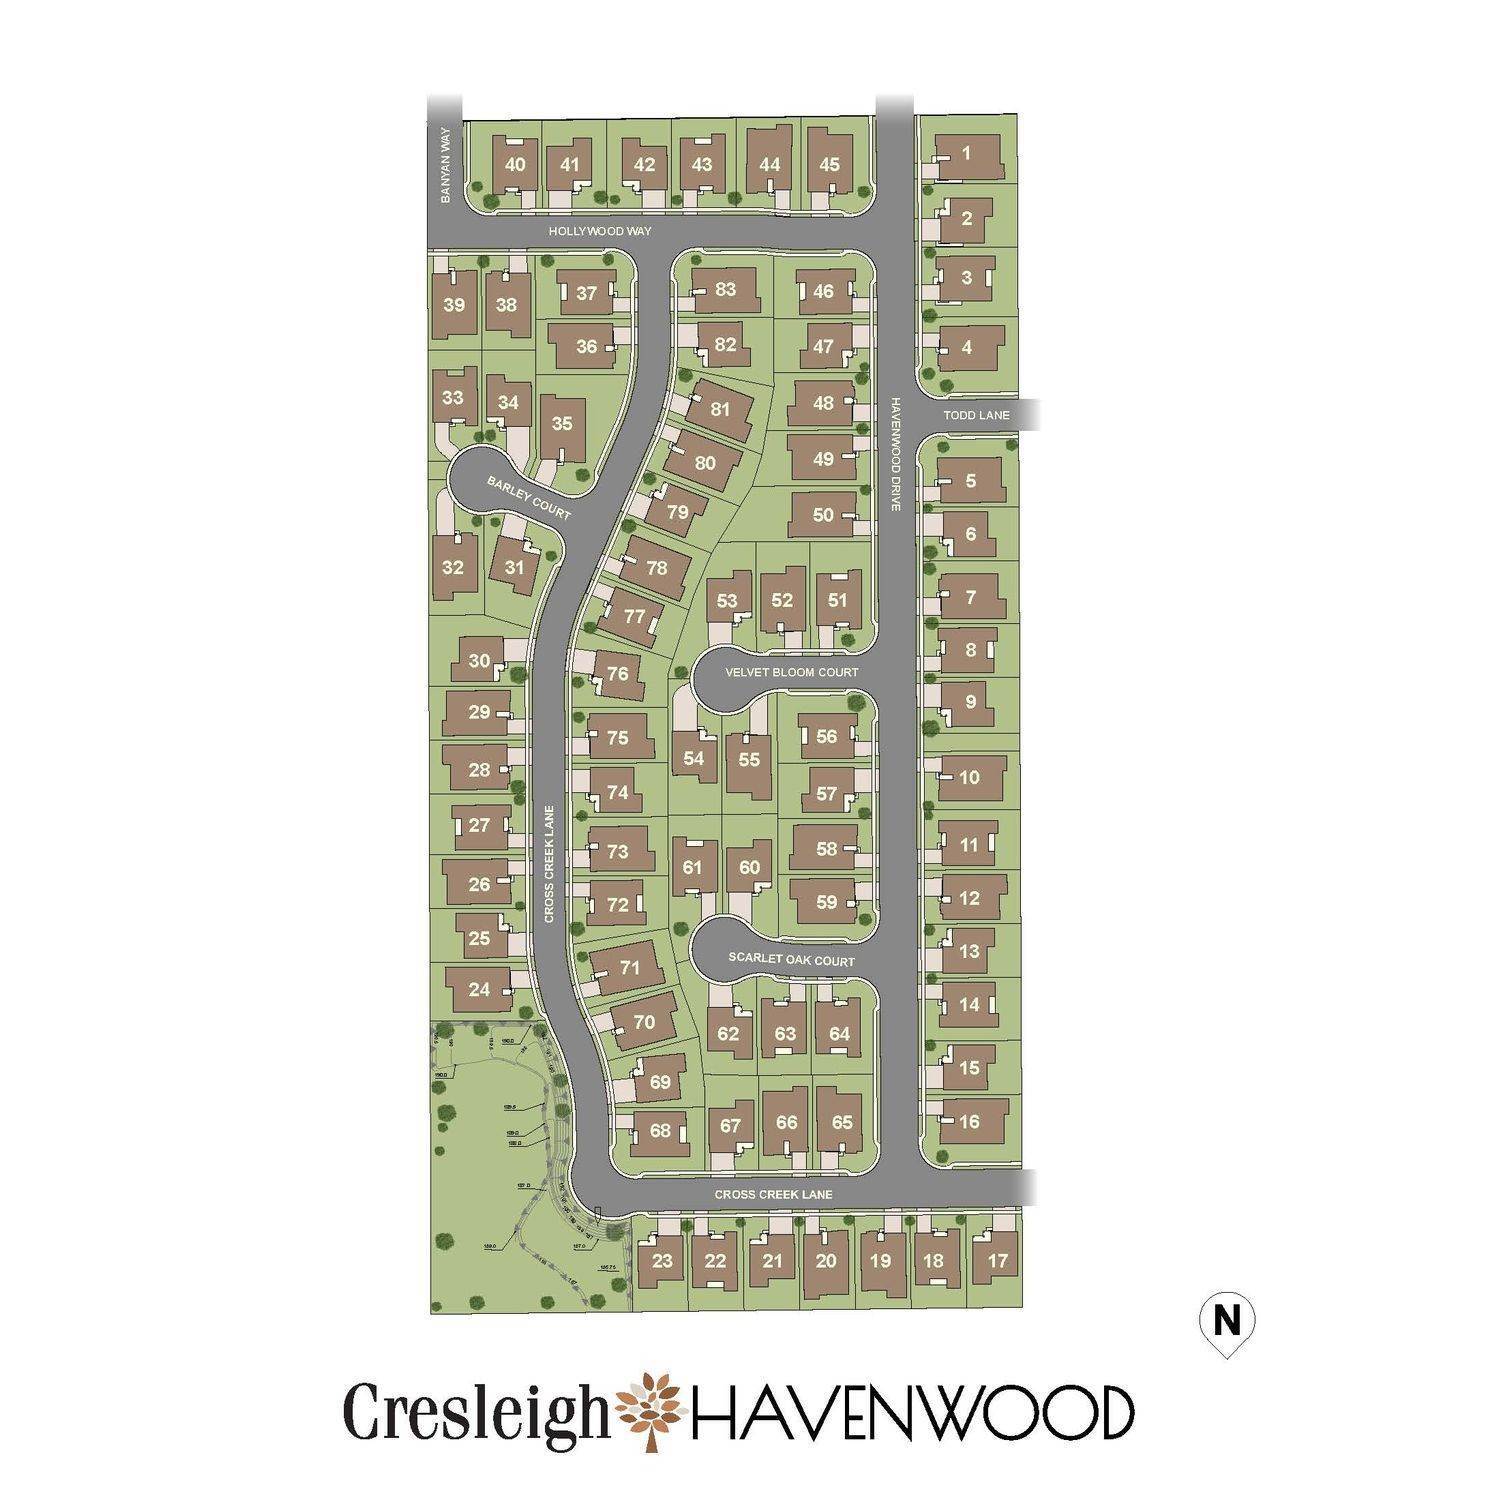 2. Cresleigh Havenwood здание в 758 Havenwood Drive, Lincoln, CA 95648